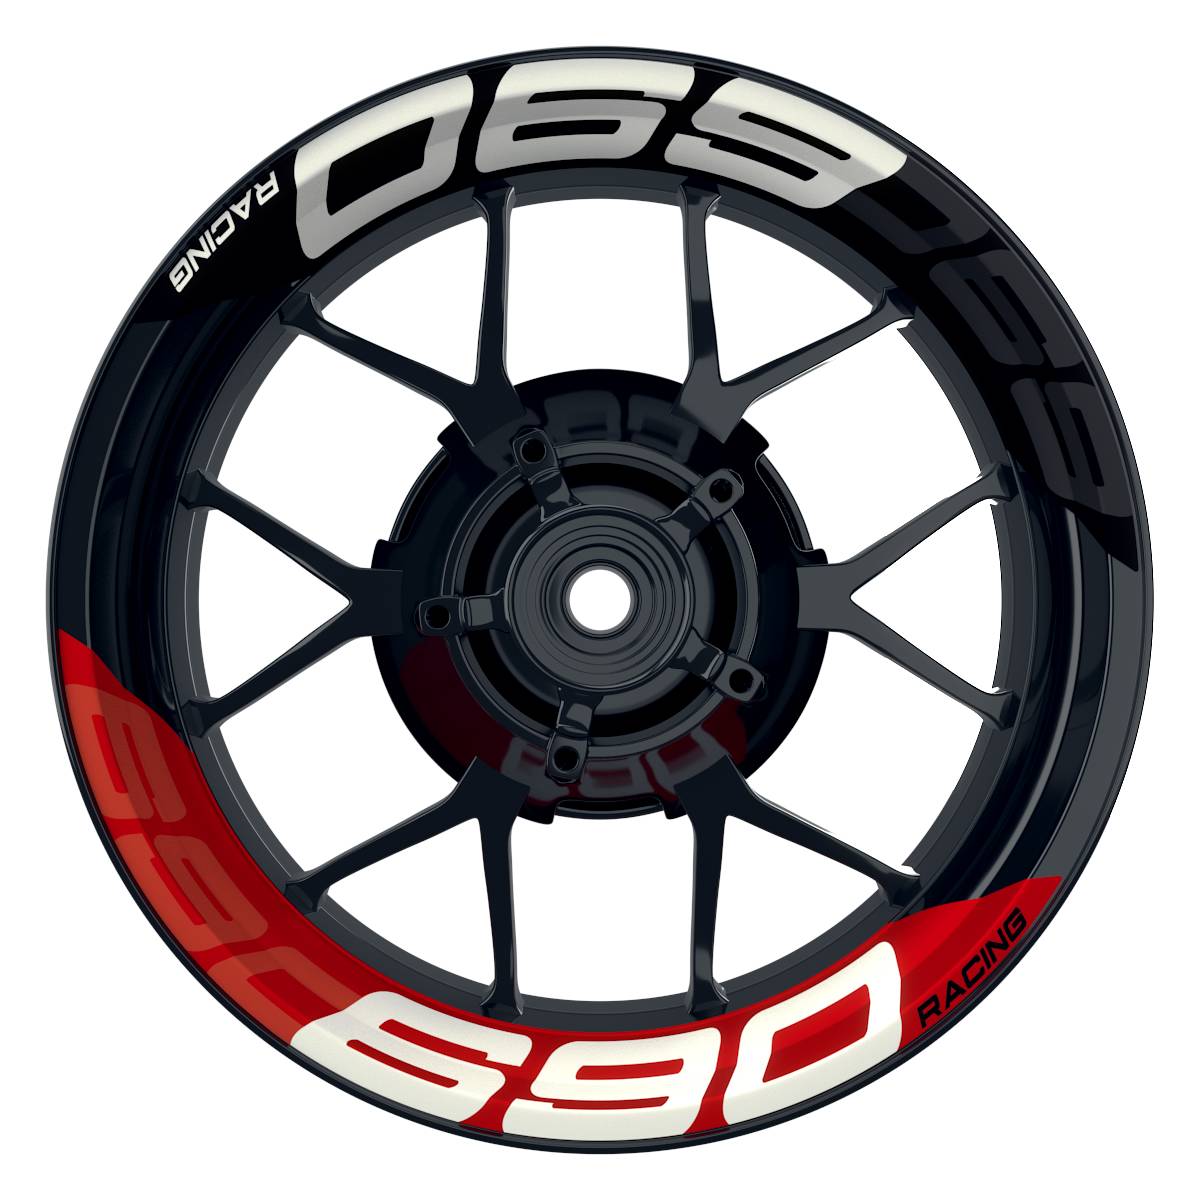 Wheelsticker Felgenaufkleber KTM Racing 690 halb halb V2 schwarz rot Frontansicht